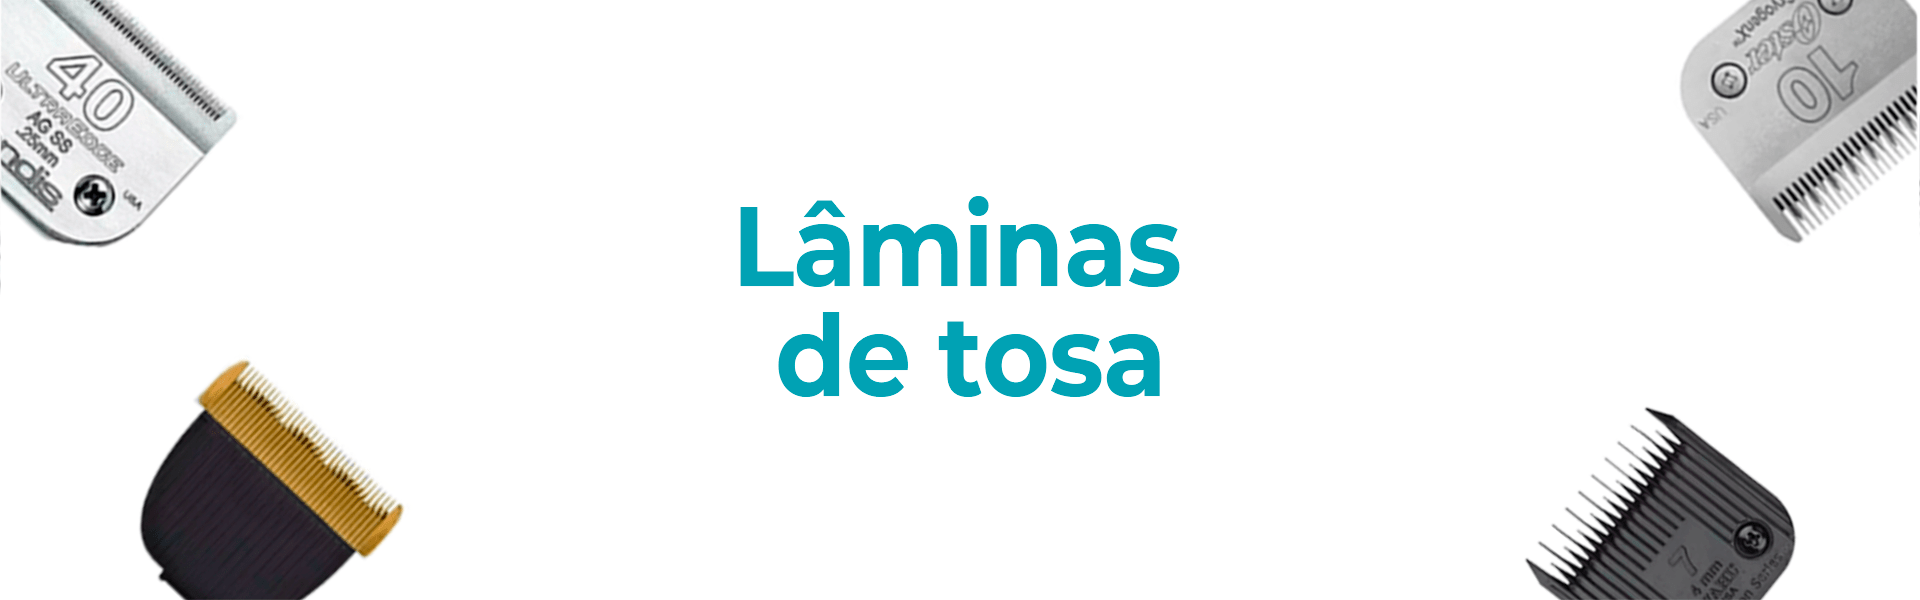 Laminas - categoria @Desktop